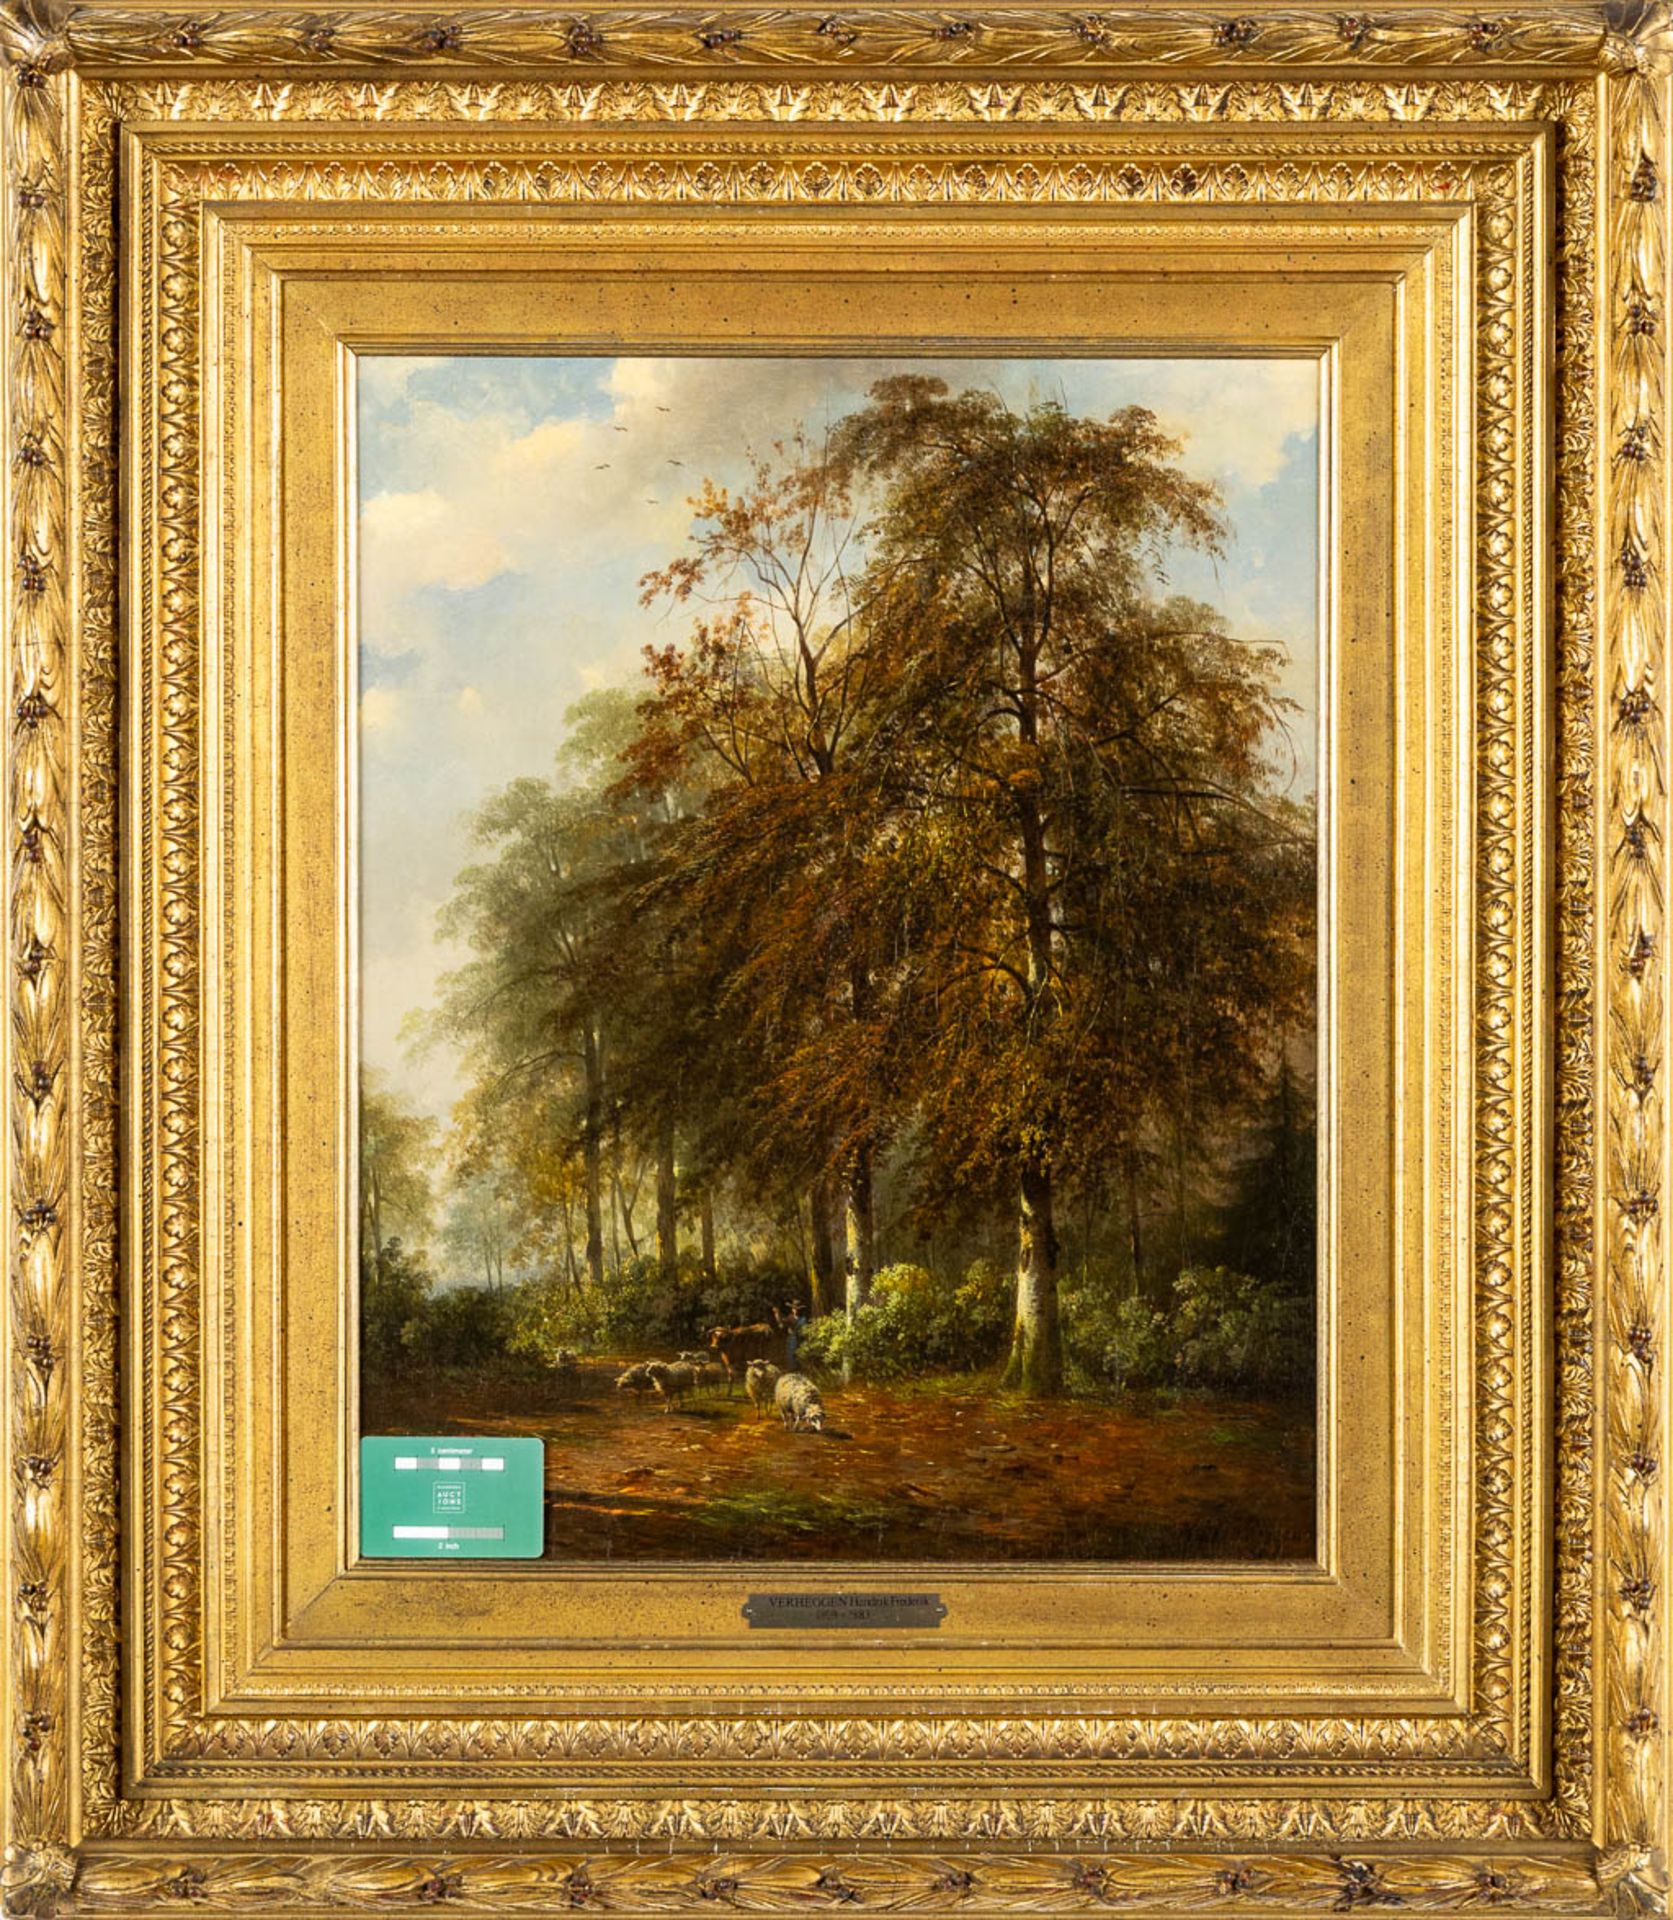 Hendrik VERHEGGEN (1809-1883) 'Sheep in a forest' Barbizon School, oil on canvas. (W:46 x H:58 cm) - Image 2 of 8